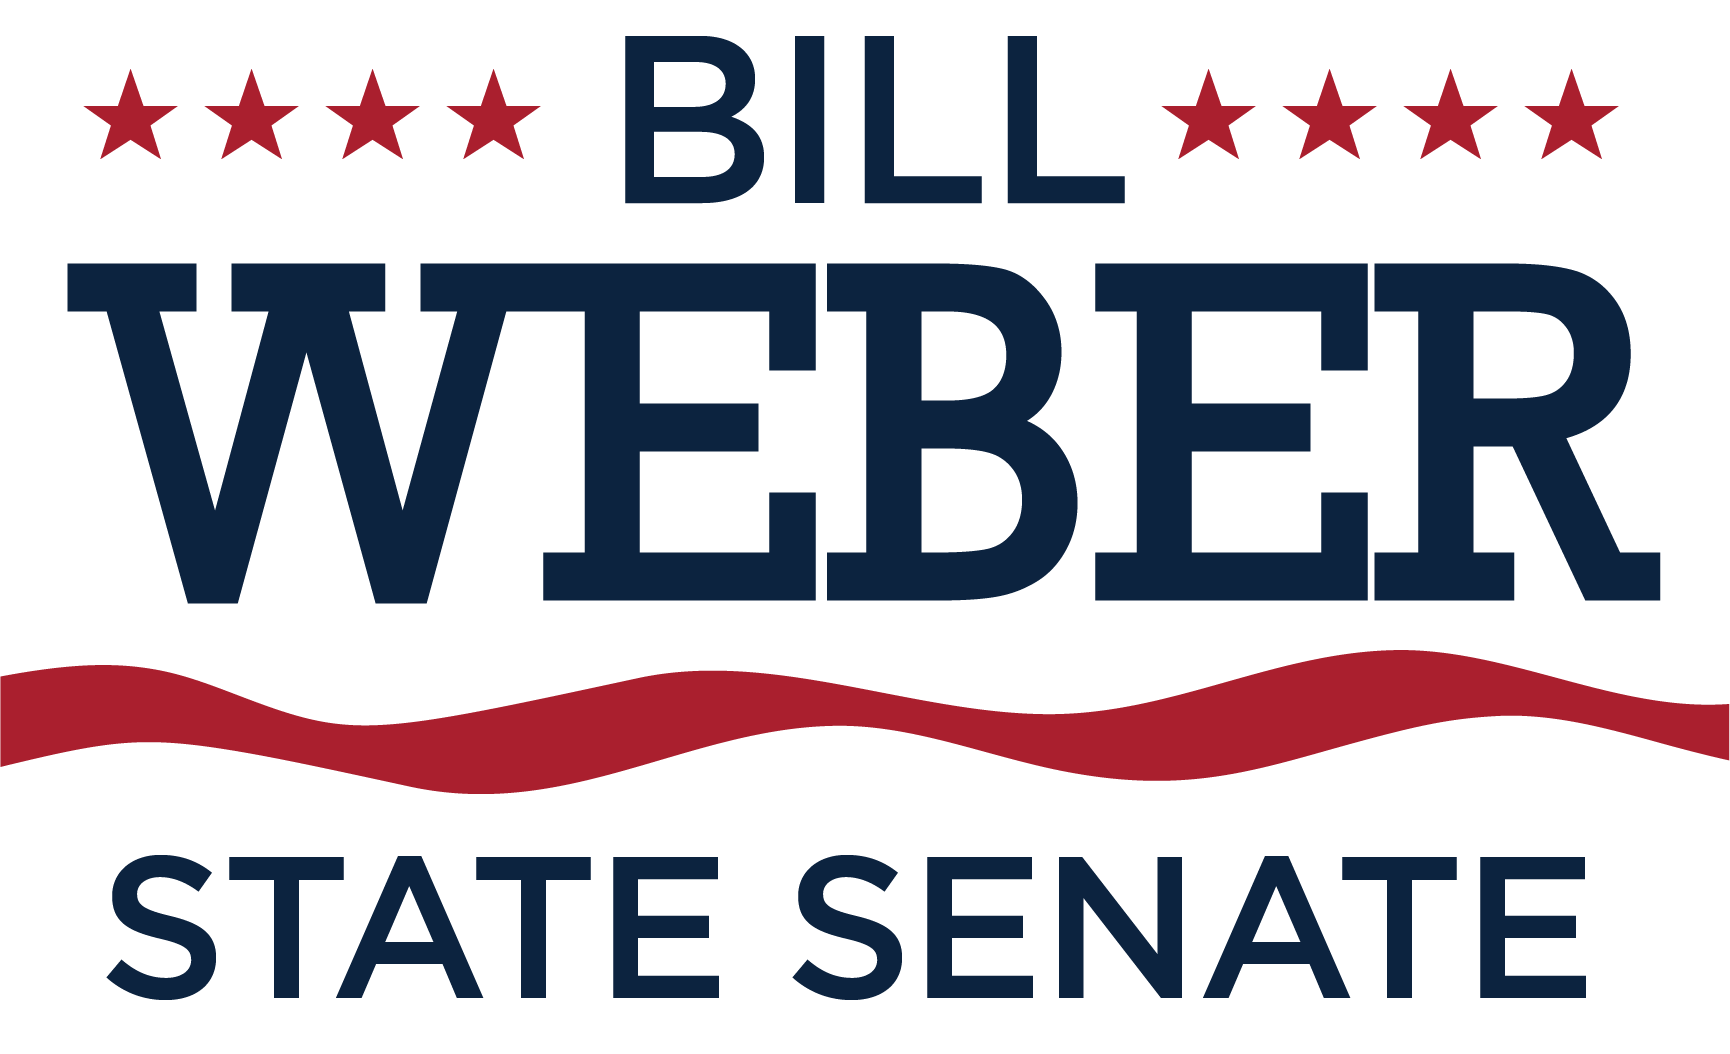 Weberb logo 0320